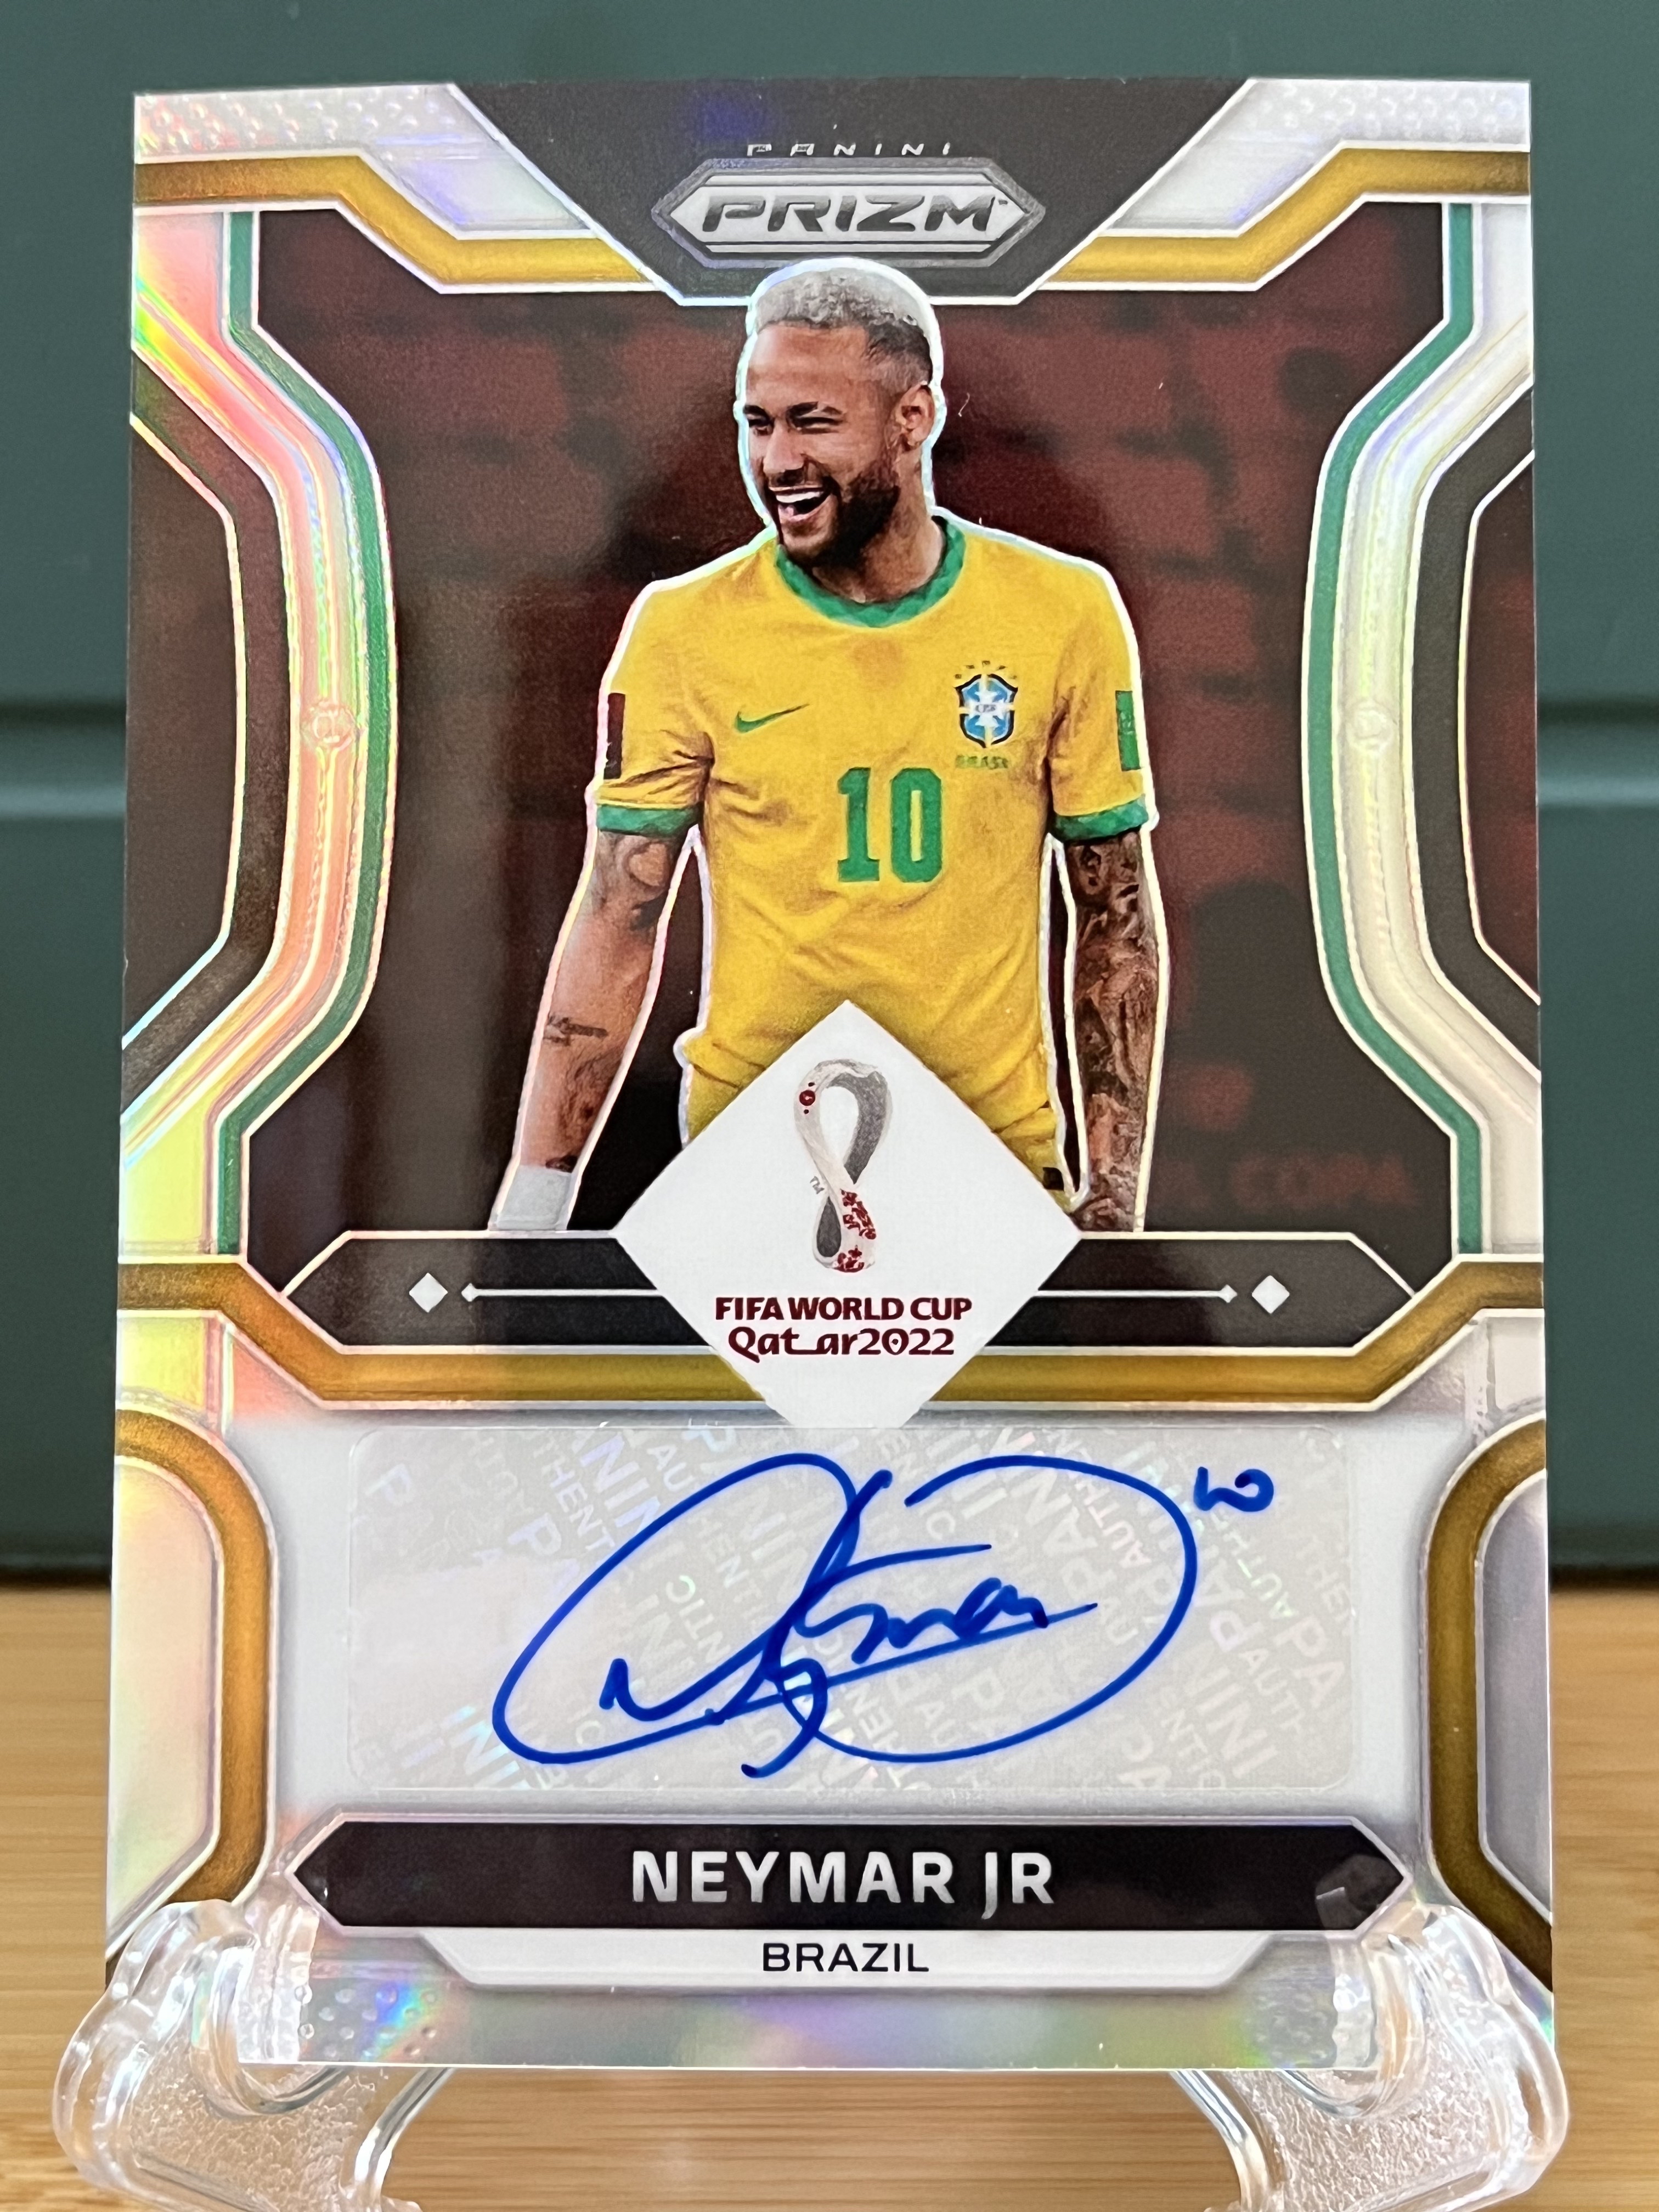 2022 Panini World Cup Prizm Neymar Jr 世界杯 巴西 内马尔 巴西核心 超巨 49编 银折 s签 墨迹稀有罕见完美签字 没出框 背后有轻微白边已示 其它完美品相